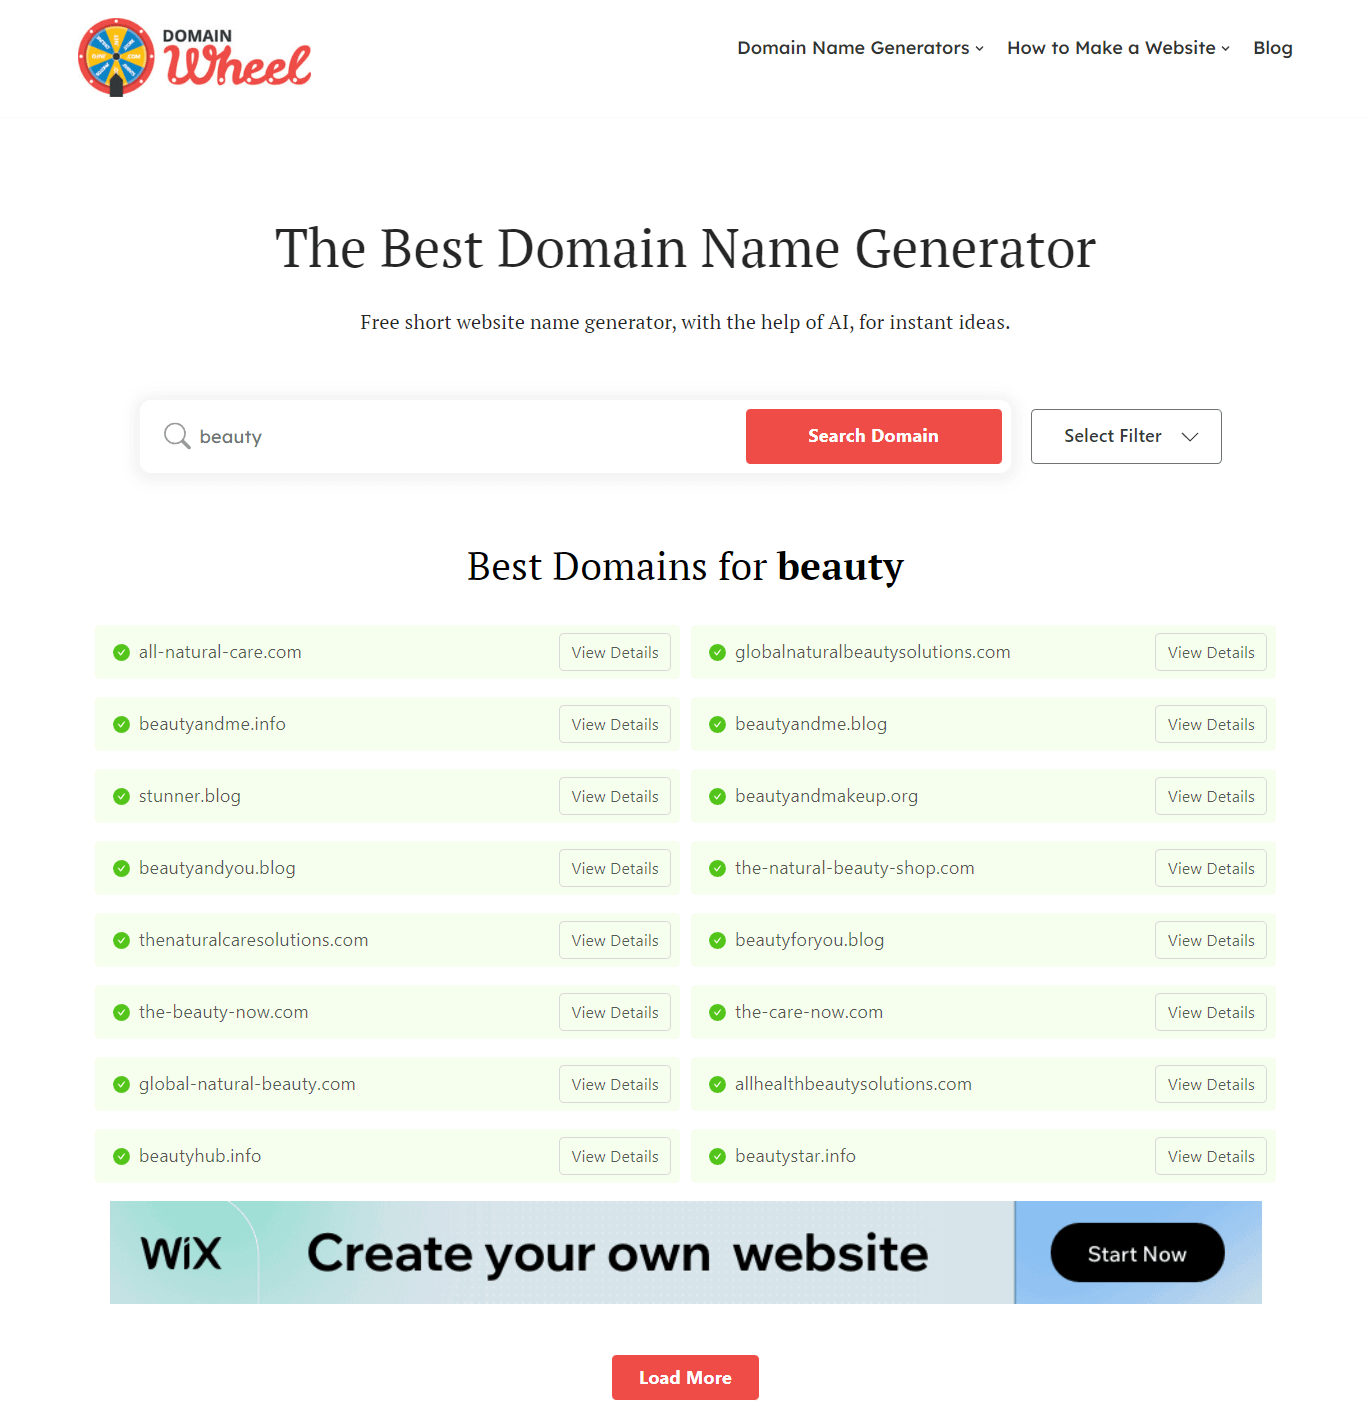 DomainWheel domain name generator search results